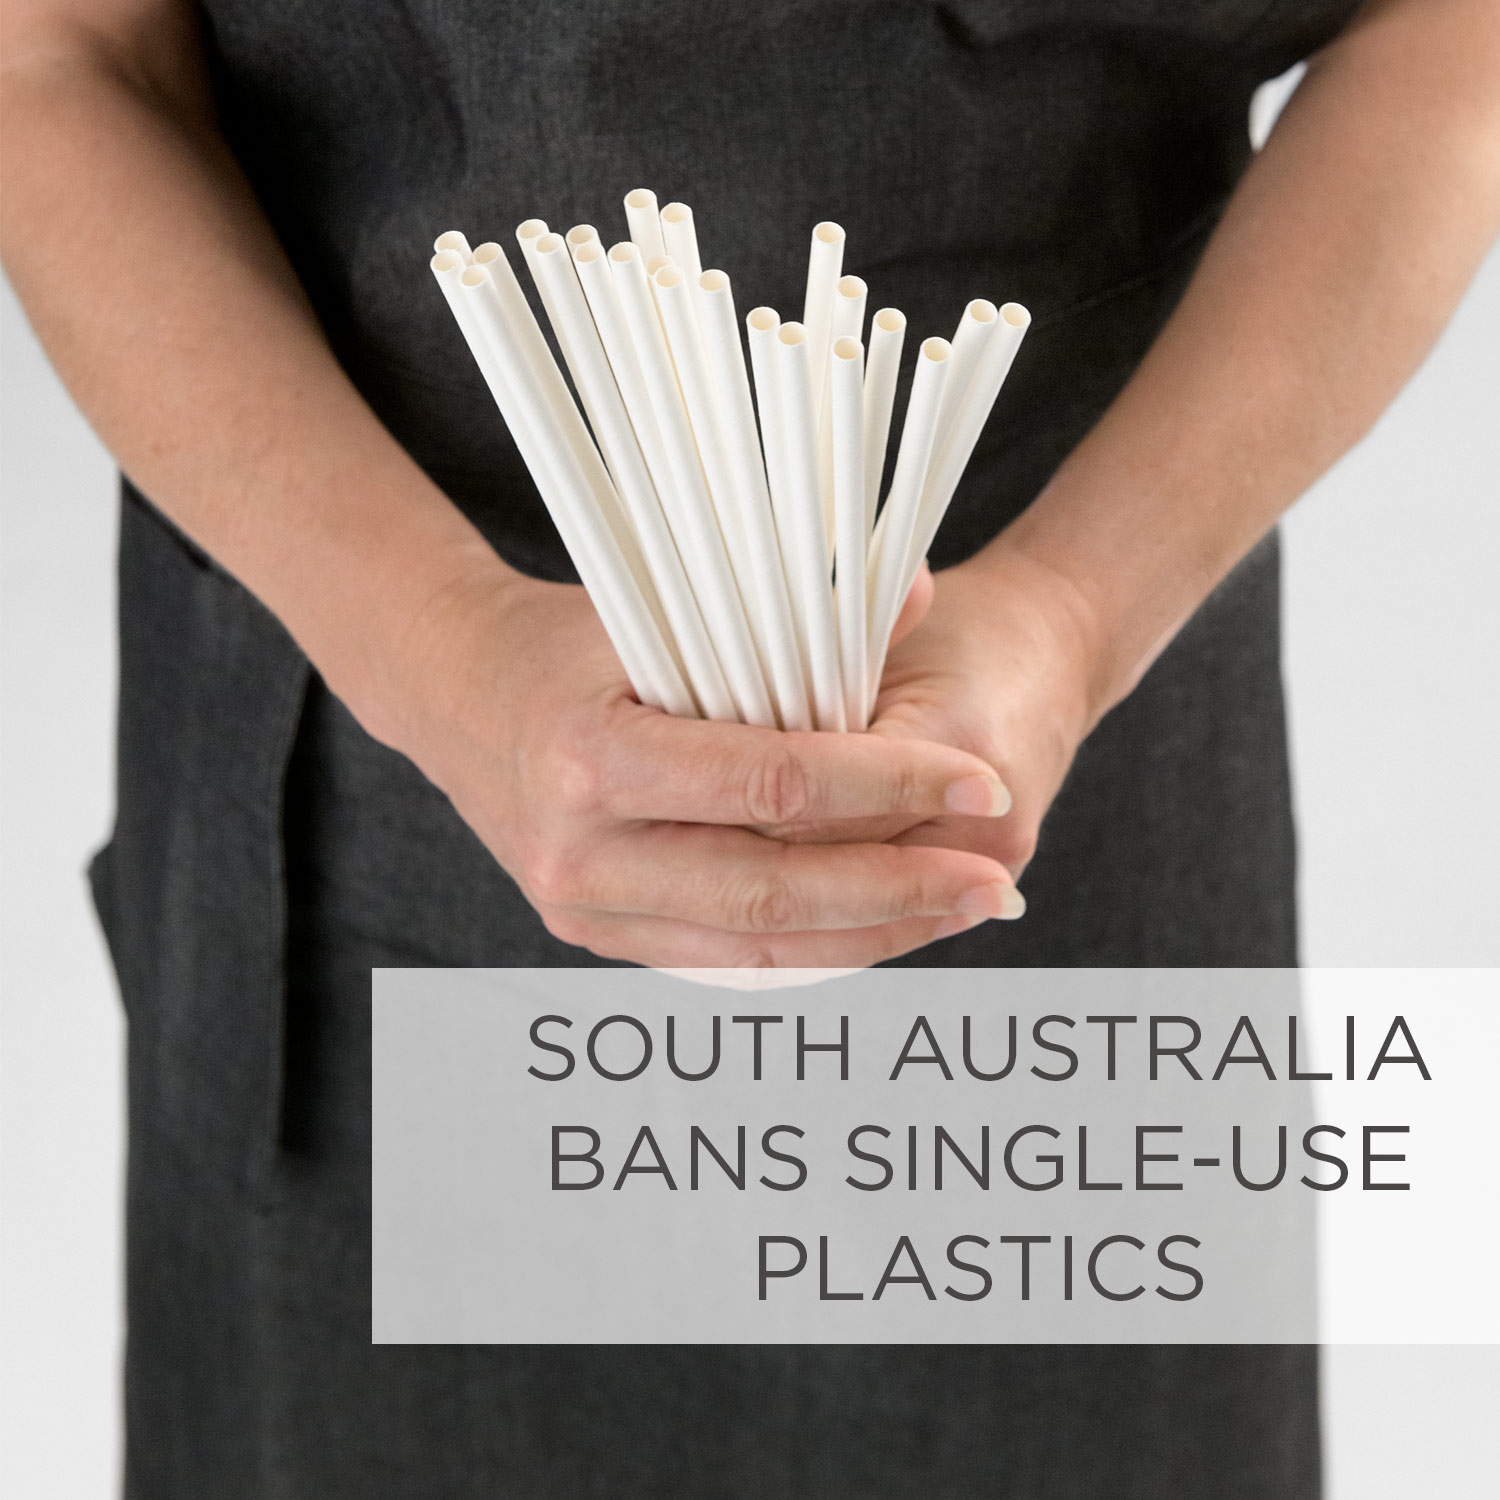 Image of Endura paper straws with text South Australia bans single-use plastics